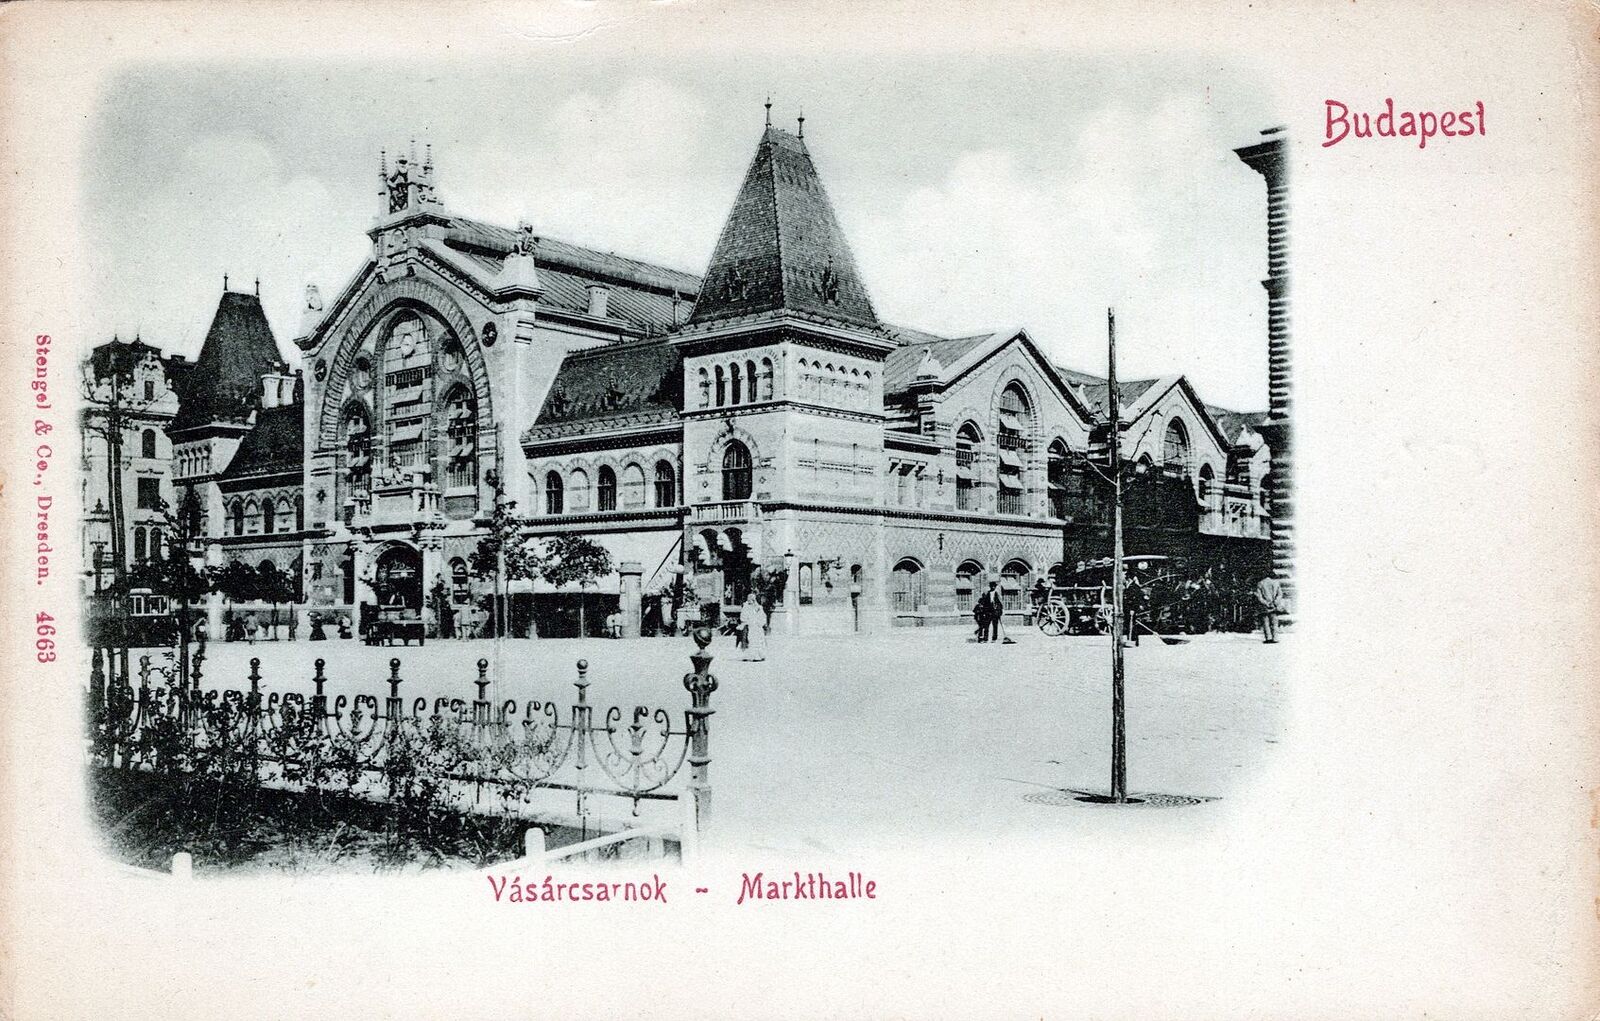 BUDAPEST - Vasarcsarnok Markthalle Postcard - Hungary - udb (pre 1908)